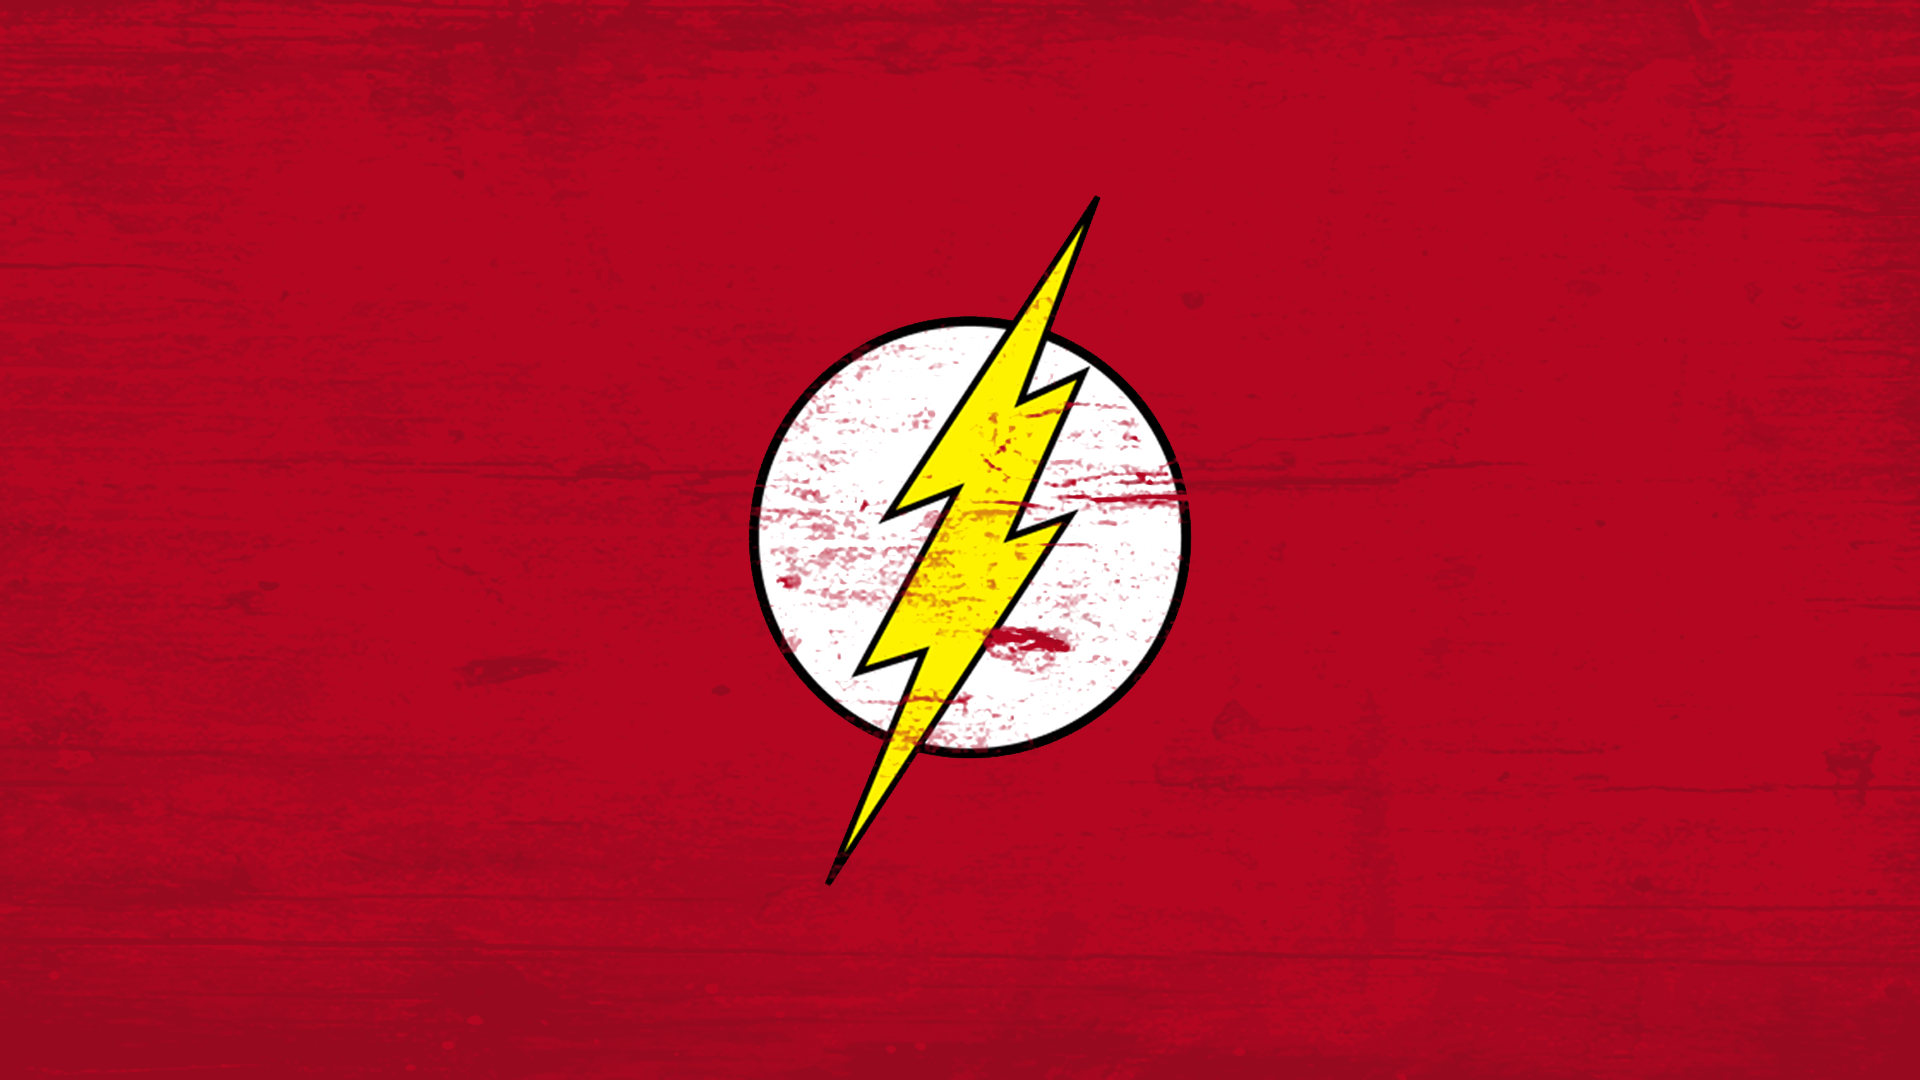 Top Flash Logo Wallpaper Hd Images for Pinterest